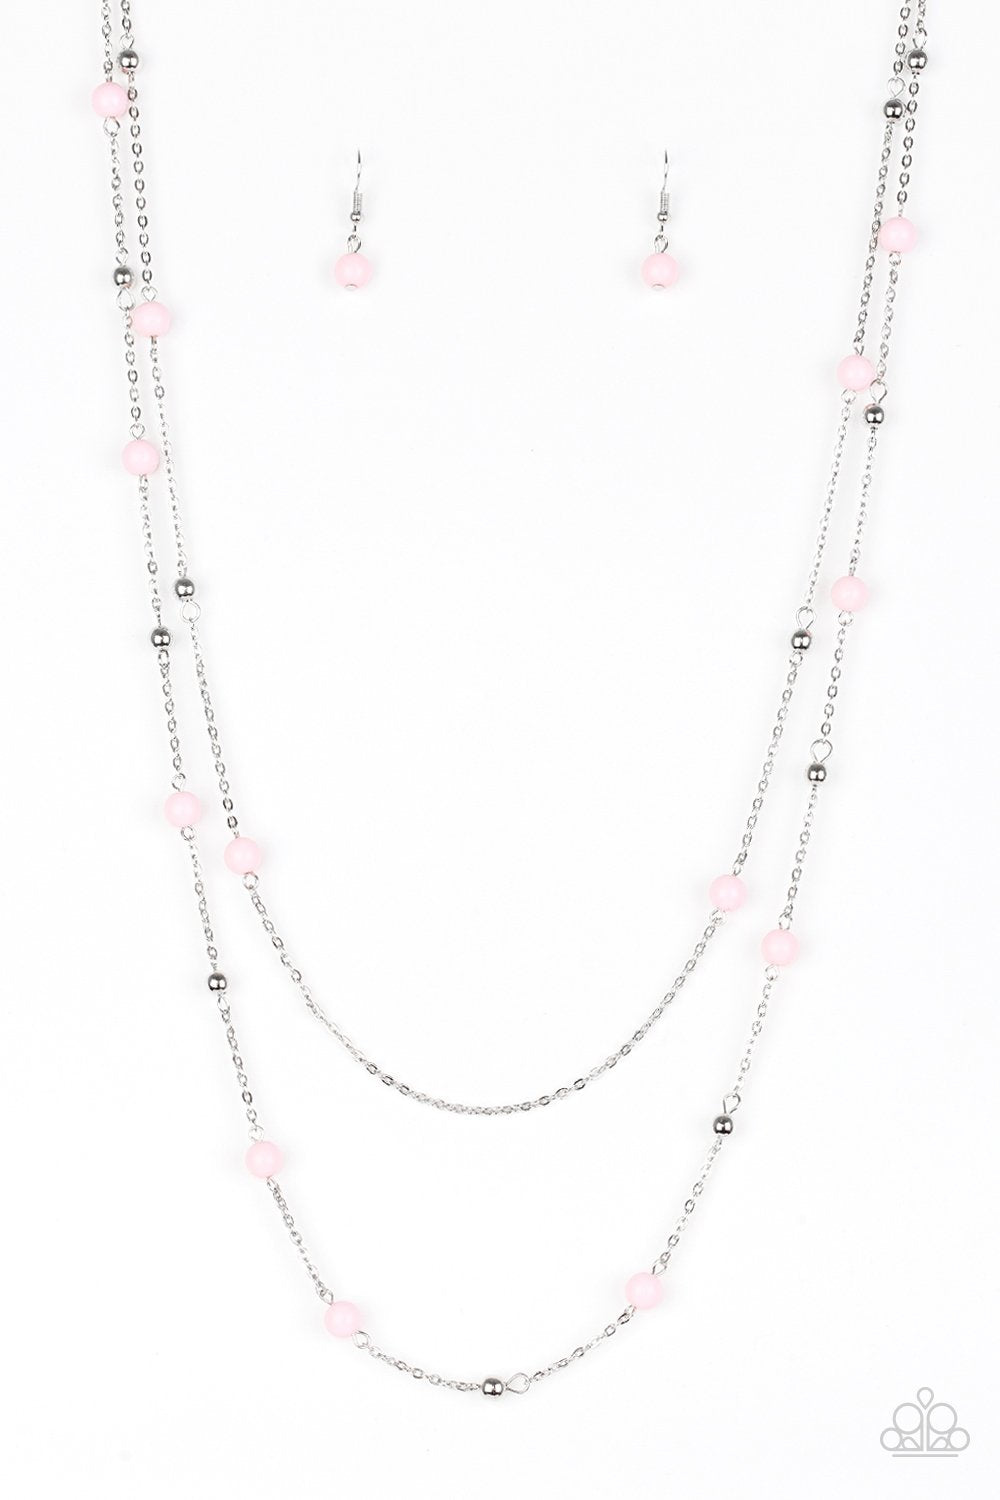 Beach Party Pageant - Pink Necklace freeshipping - JewLz4u Gemstone Gallery